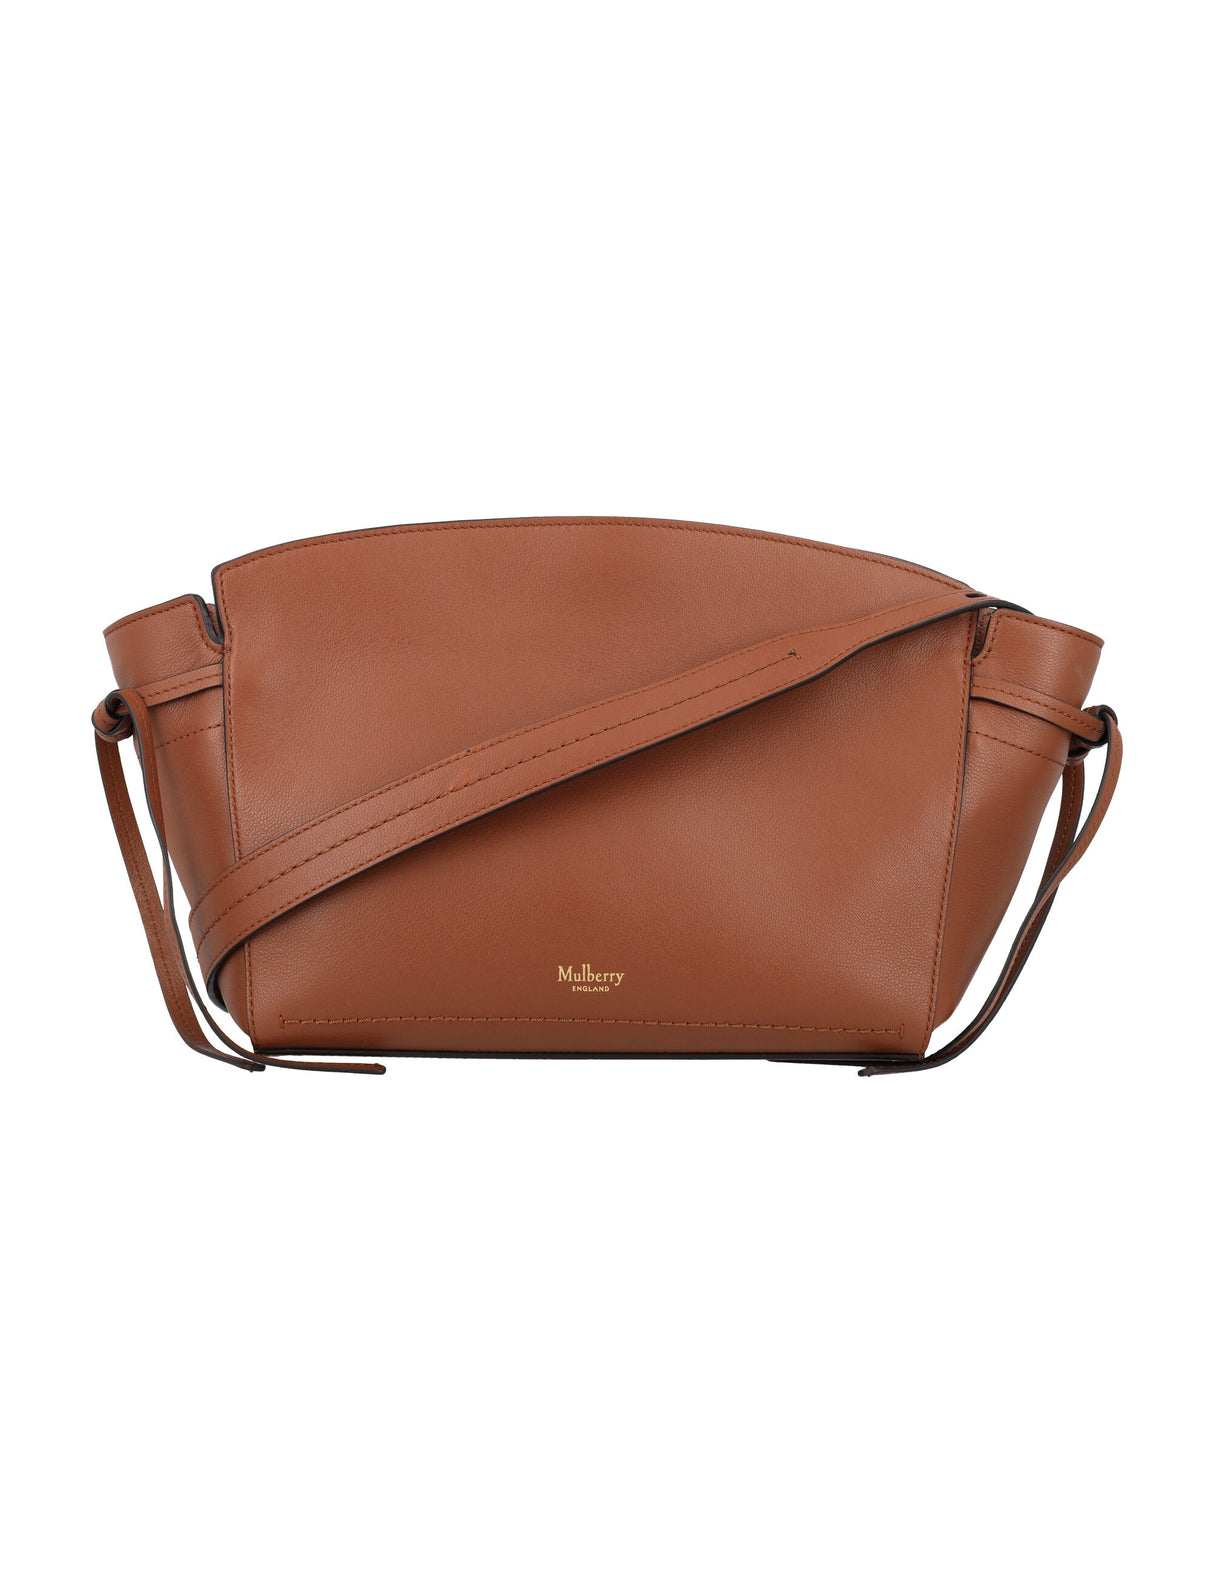 MULBERRY Micro Classic Grain Leather Crossbody Handbag for Women